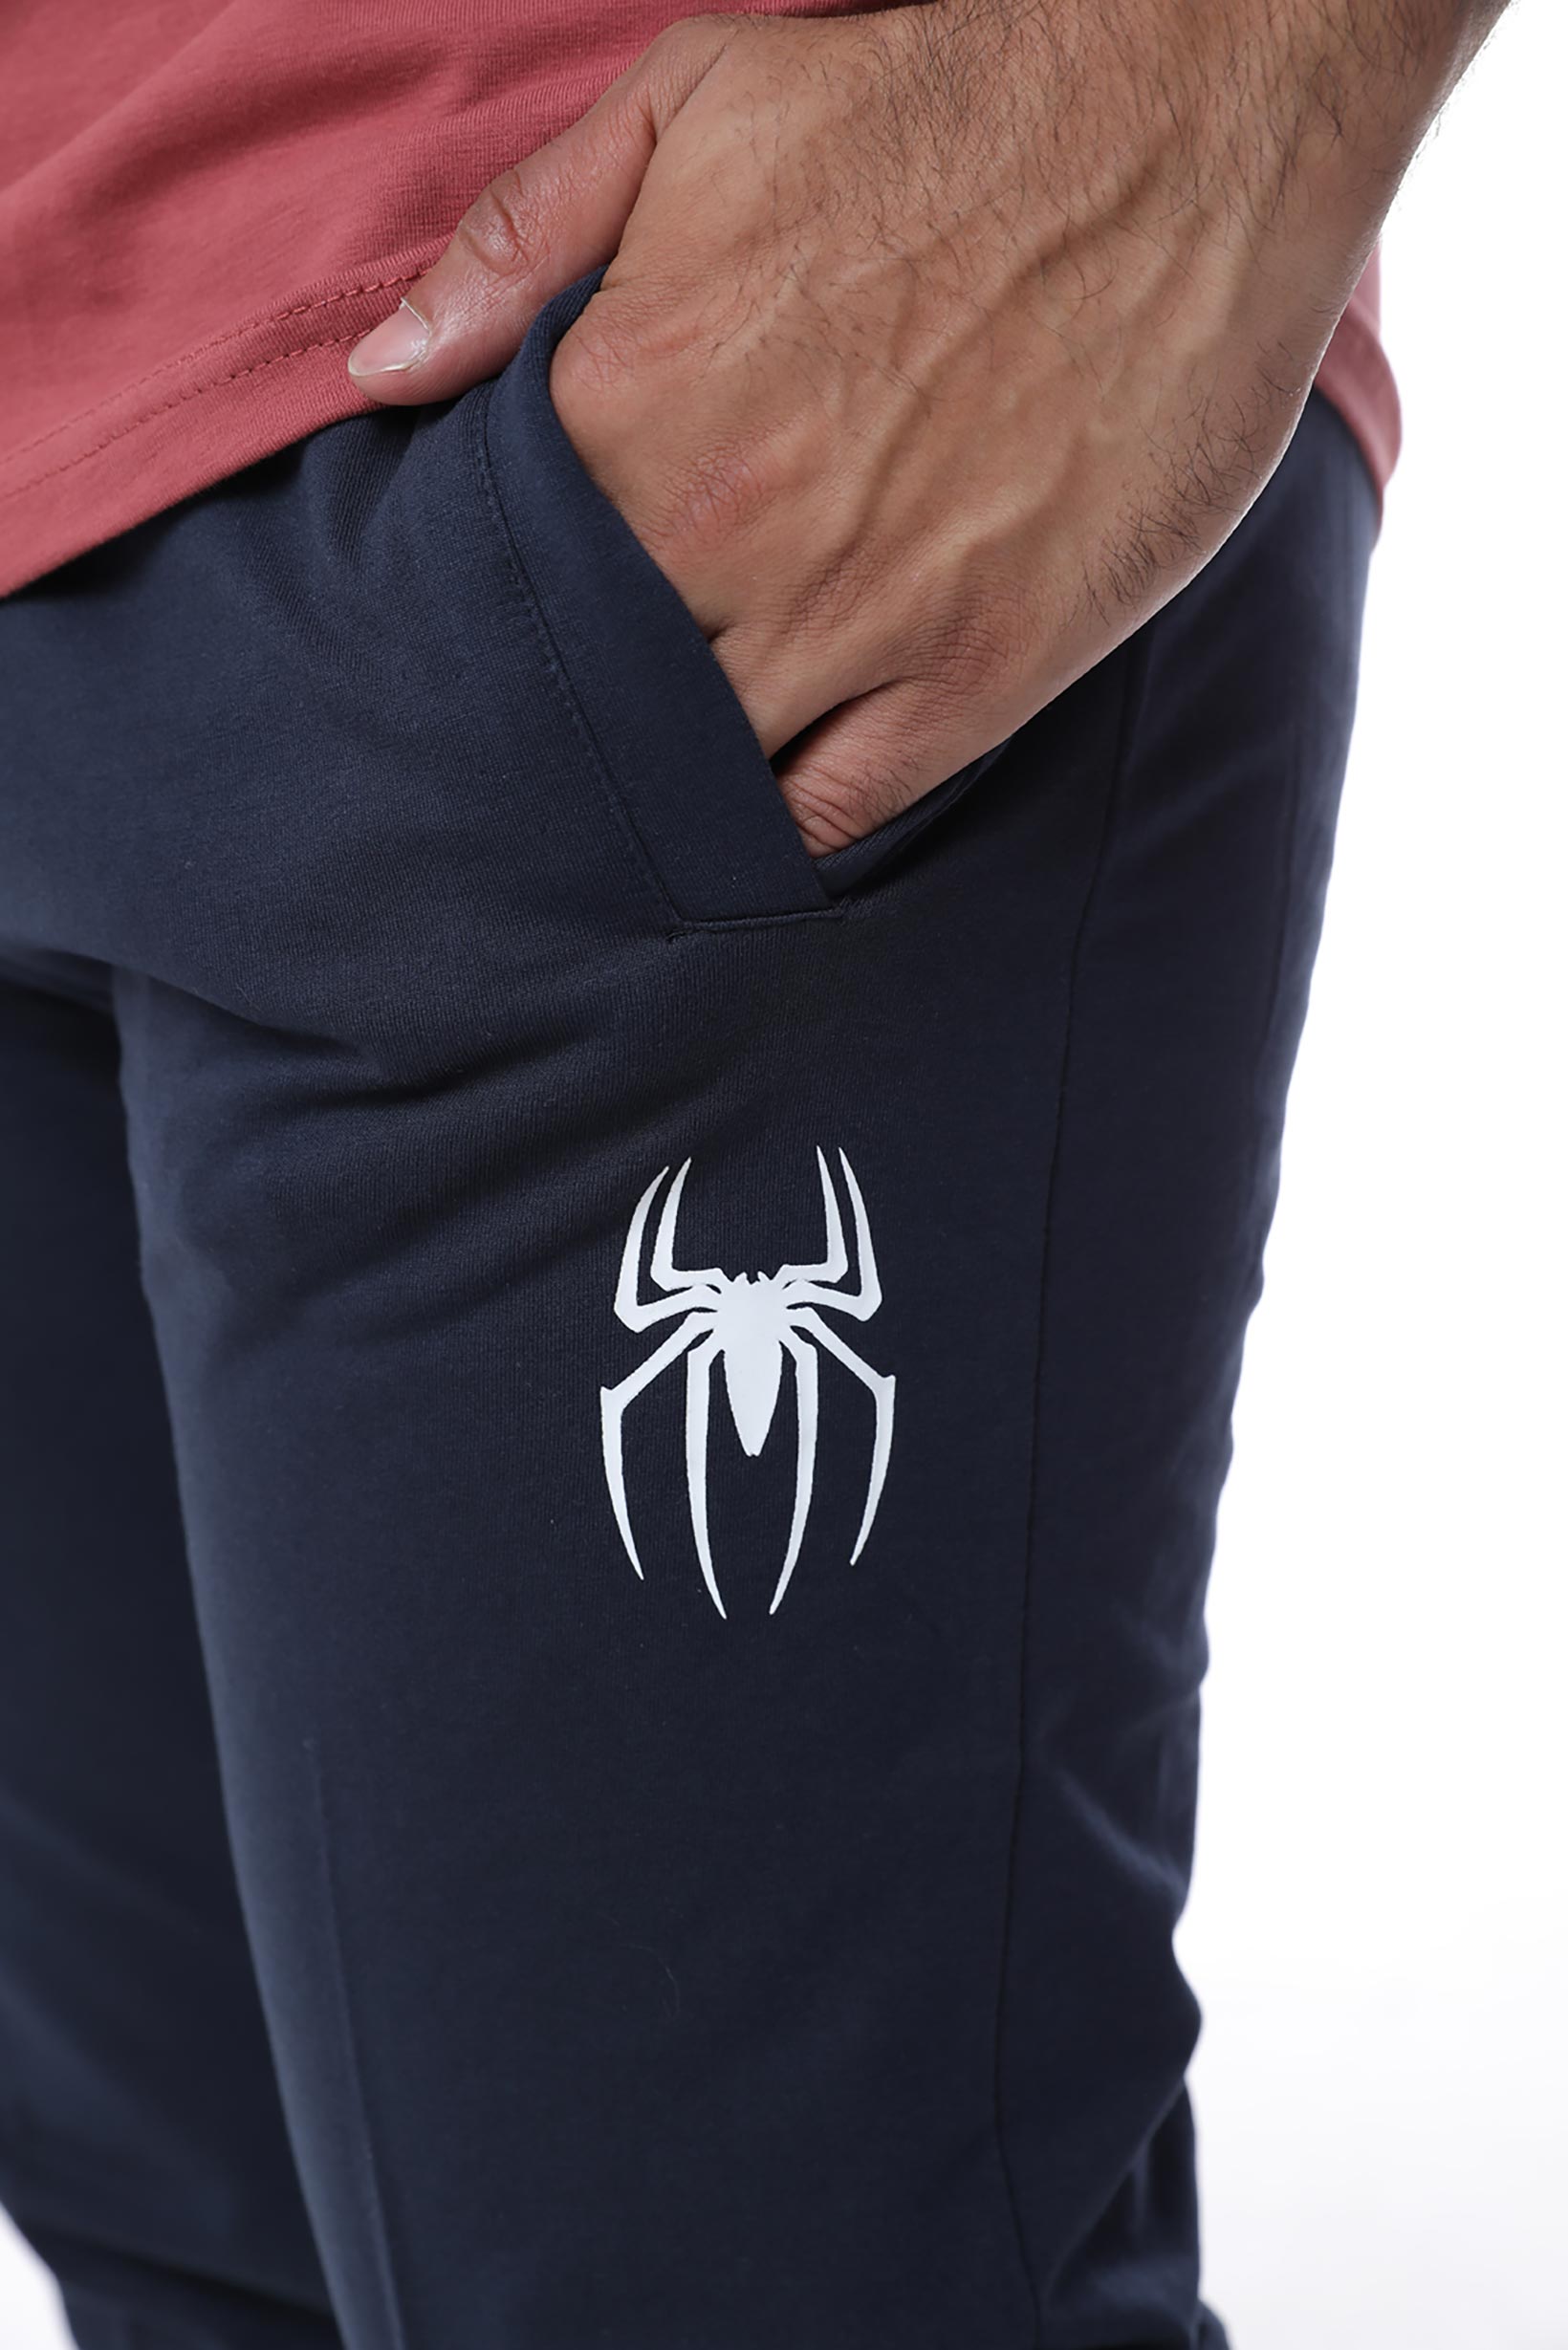 Spider mens short sleeve suit RUST